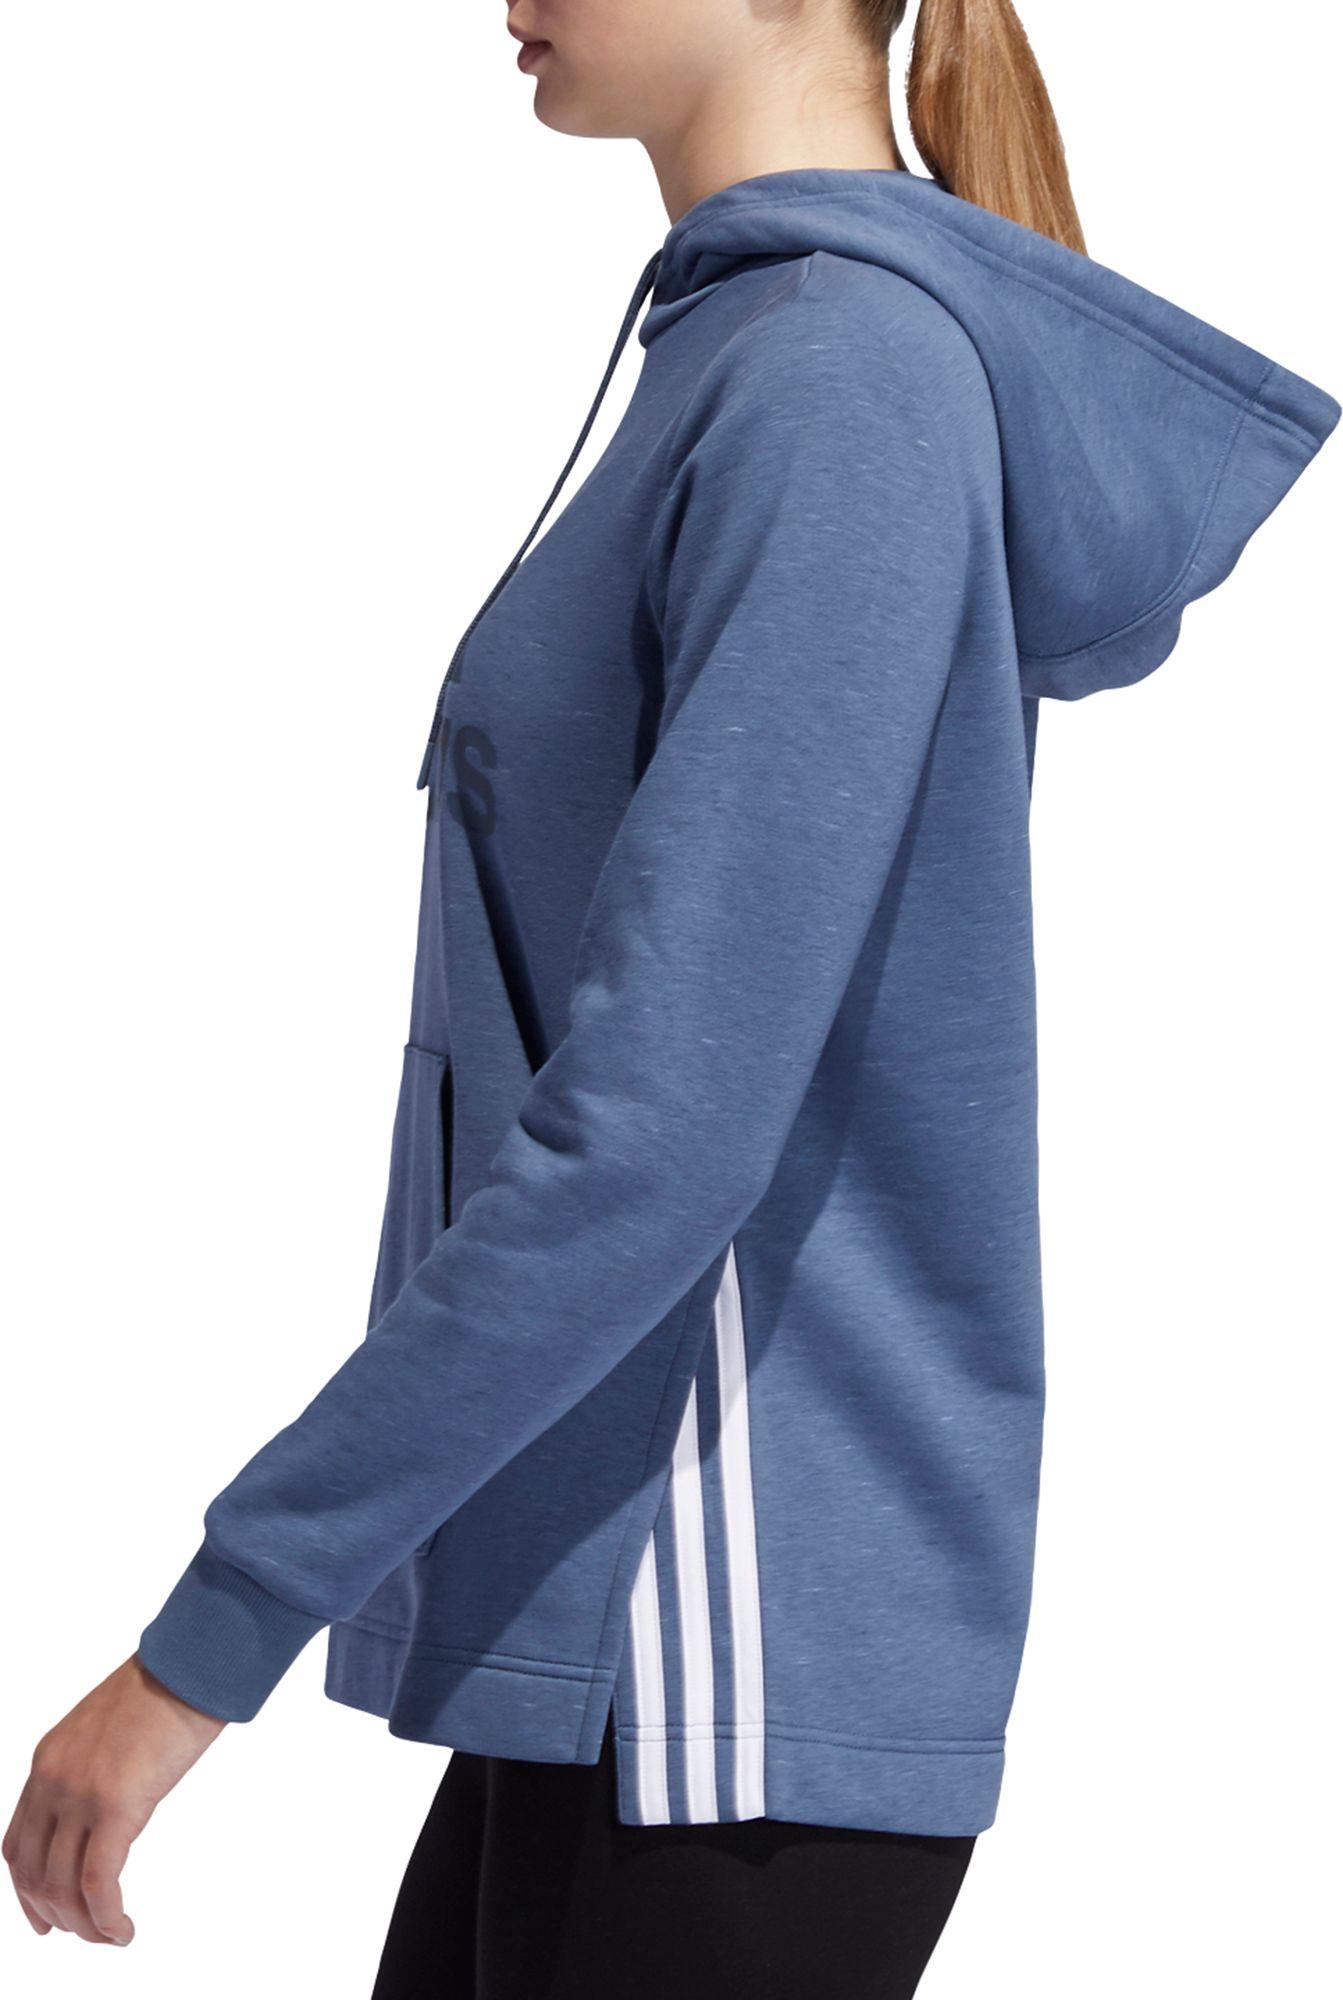 adidas post game hoodie women's